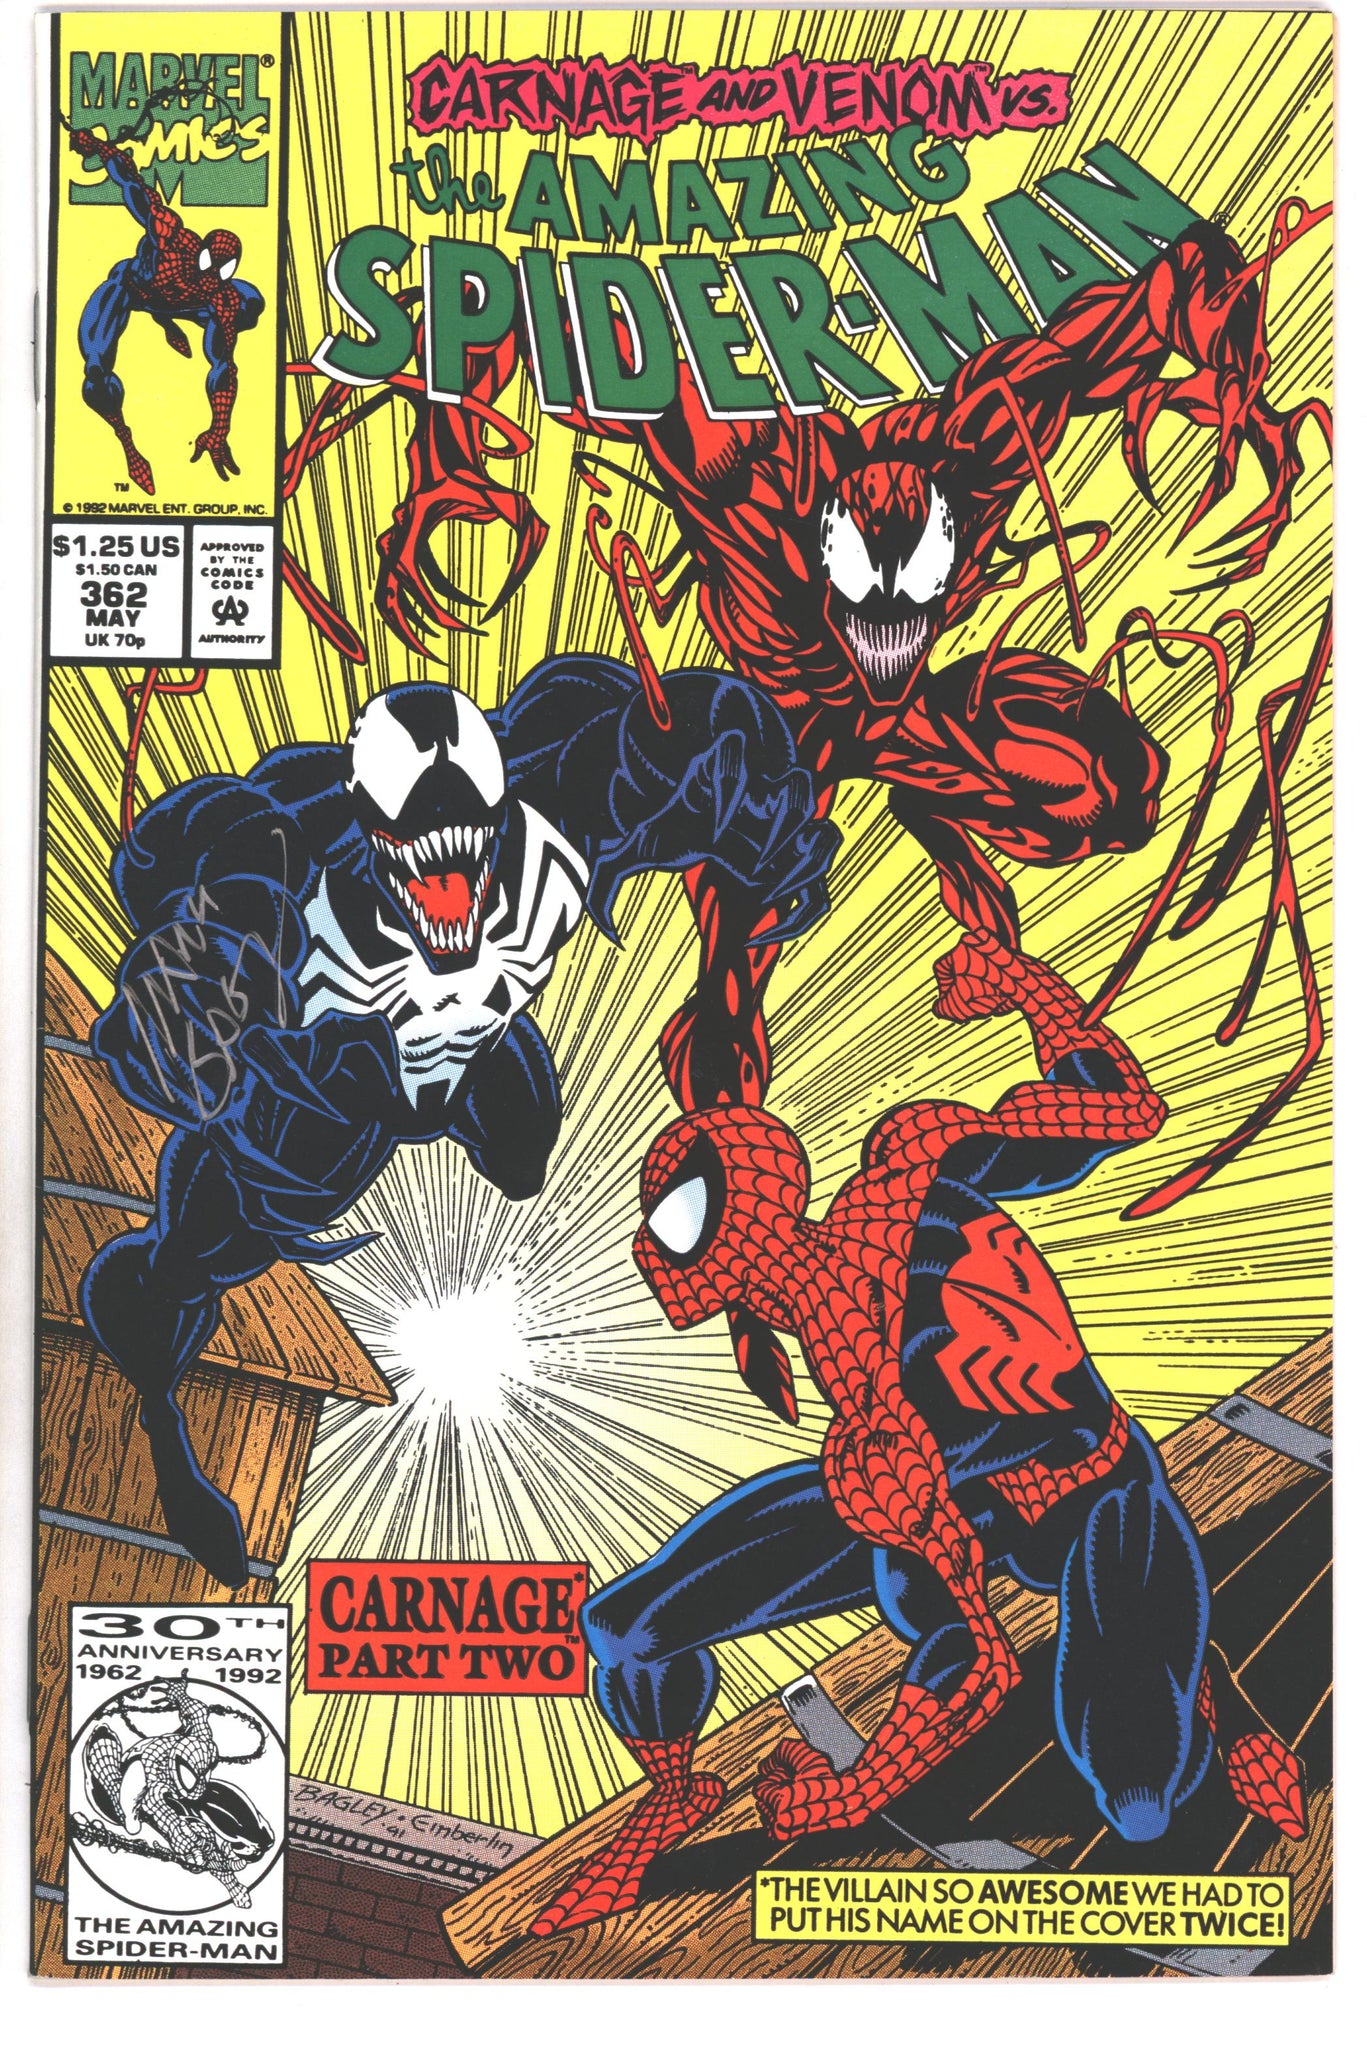 Amazing Spider-Man #362 SIGNED